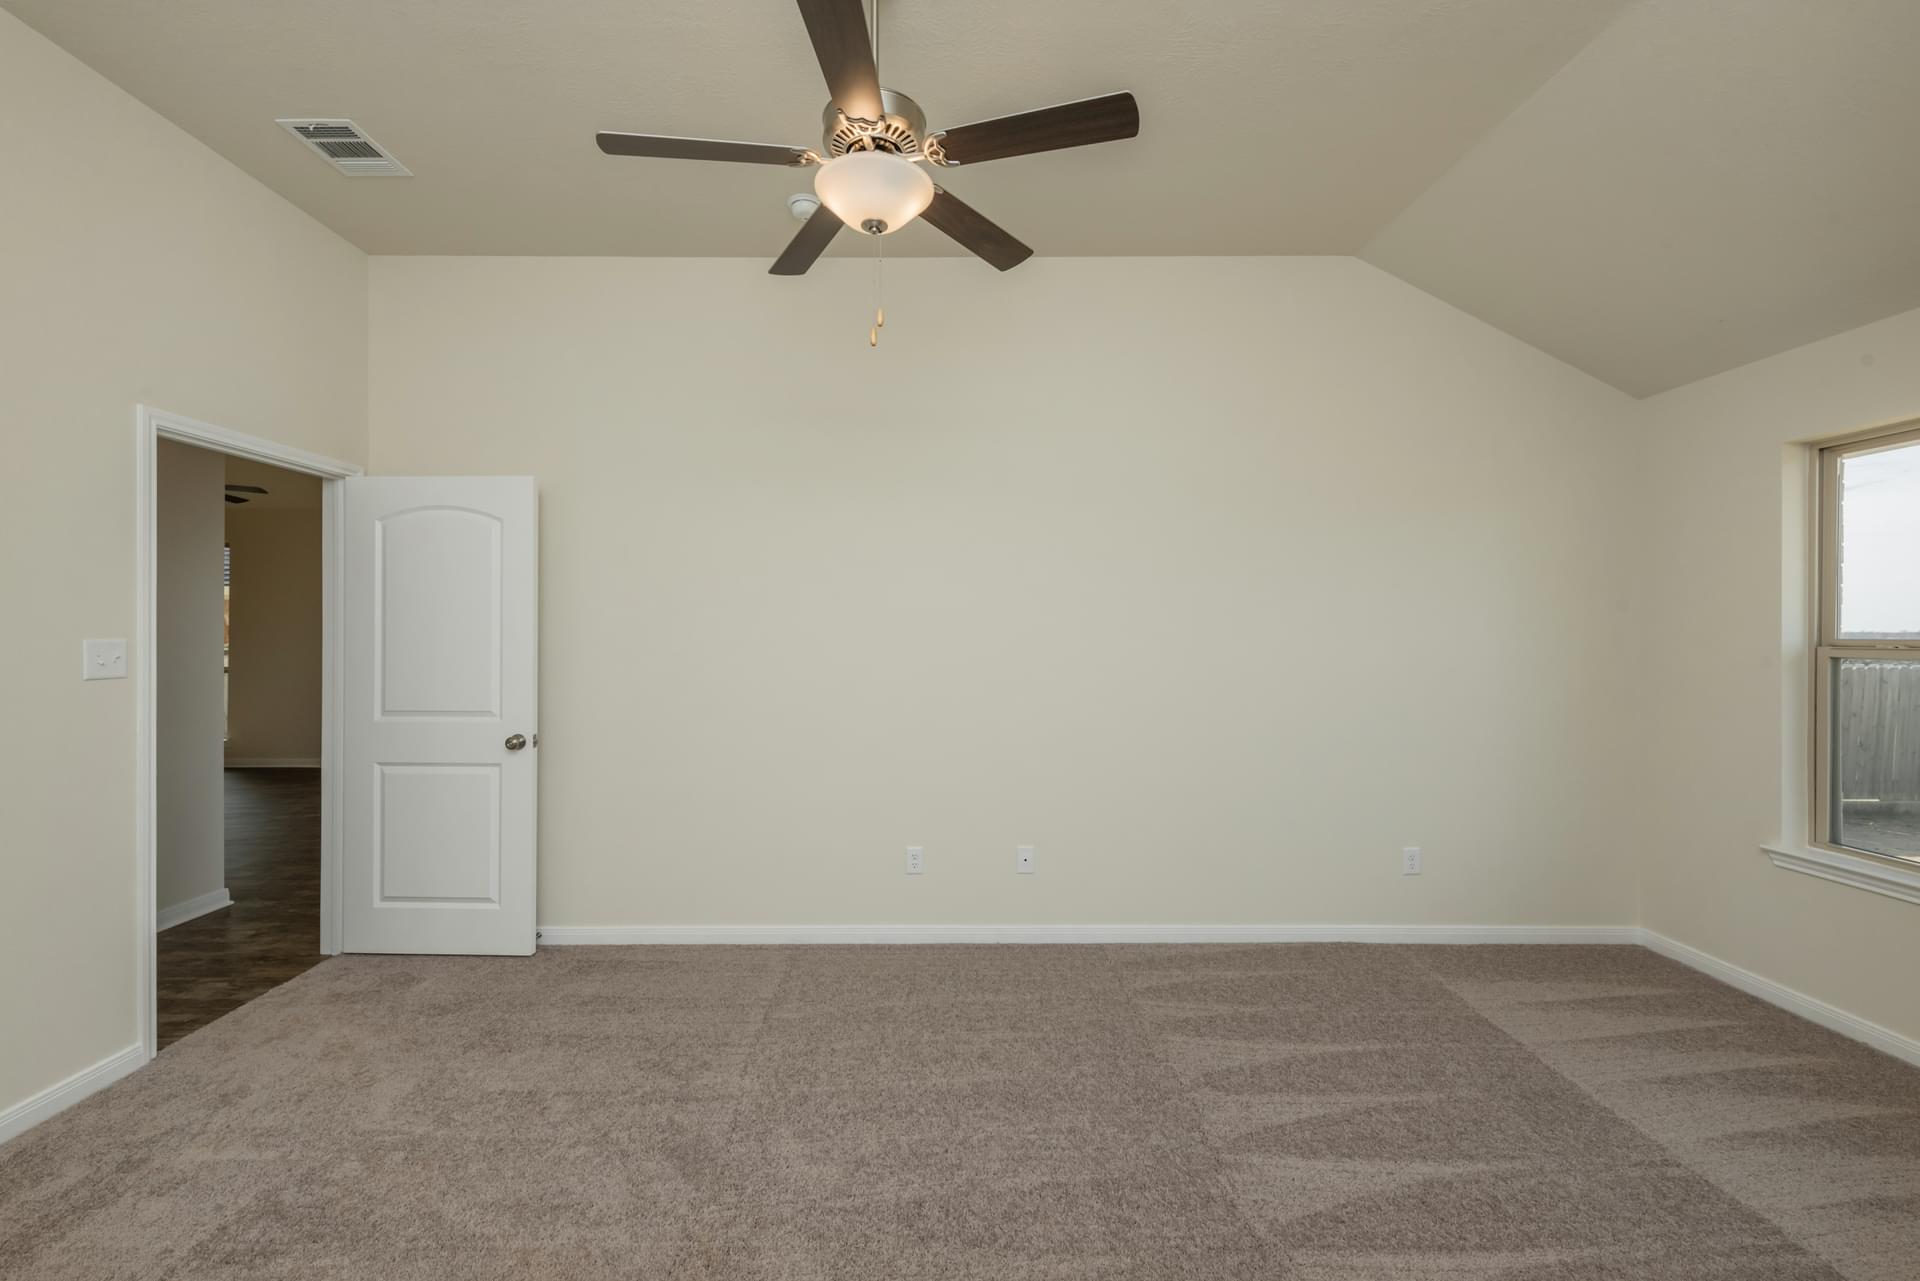 1,509sf New Home in Copperas Cove, TX